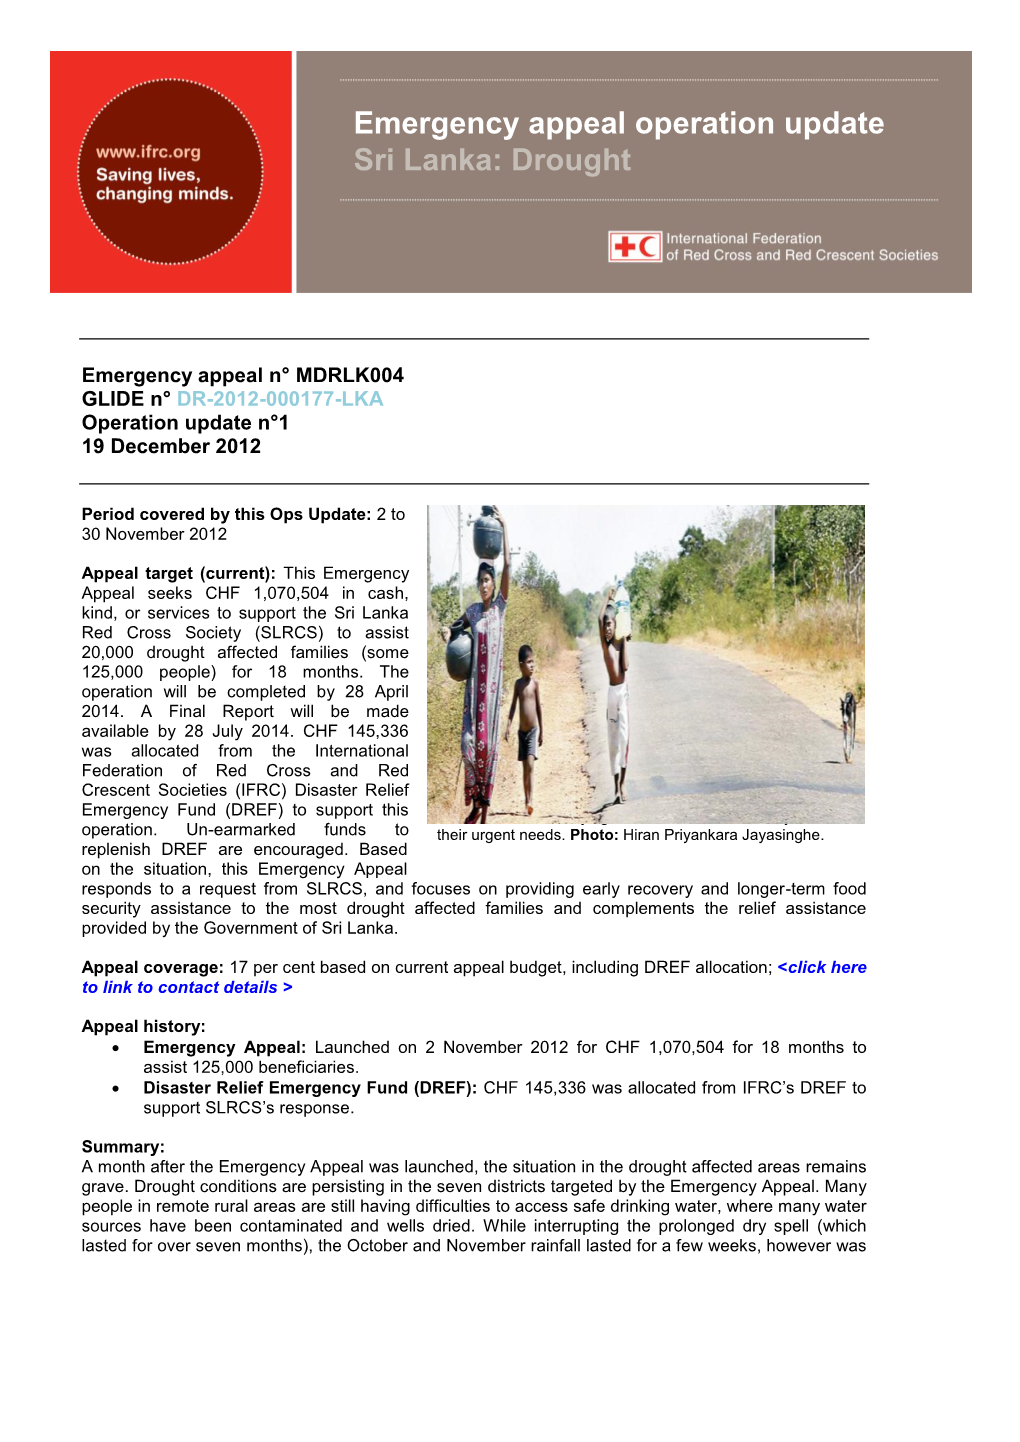 Emergency Appeal Operation Update Sri Lanka: Drought